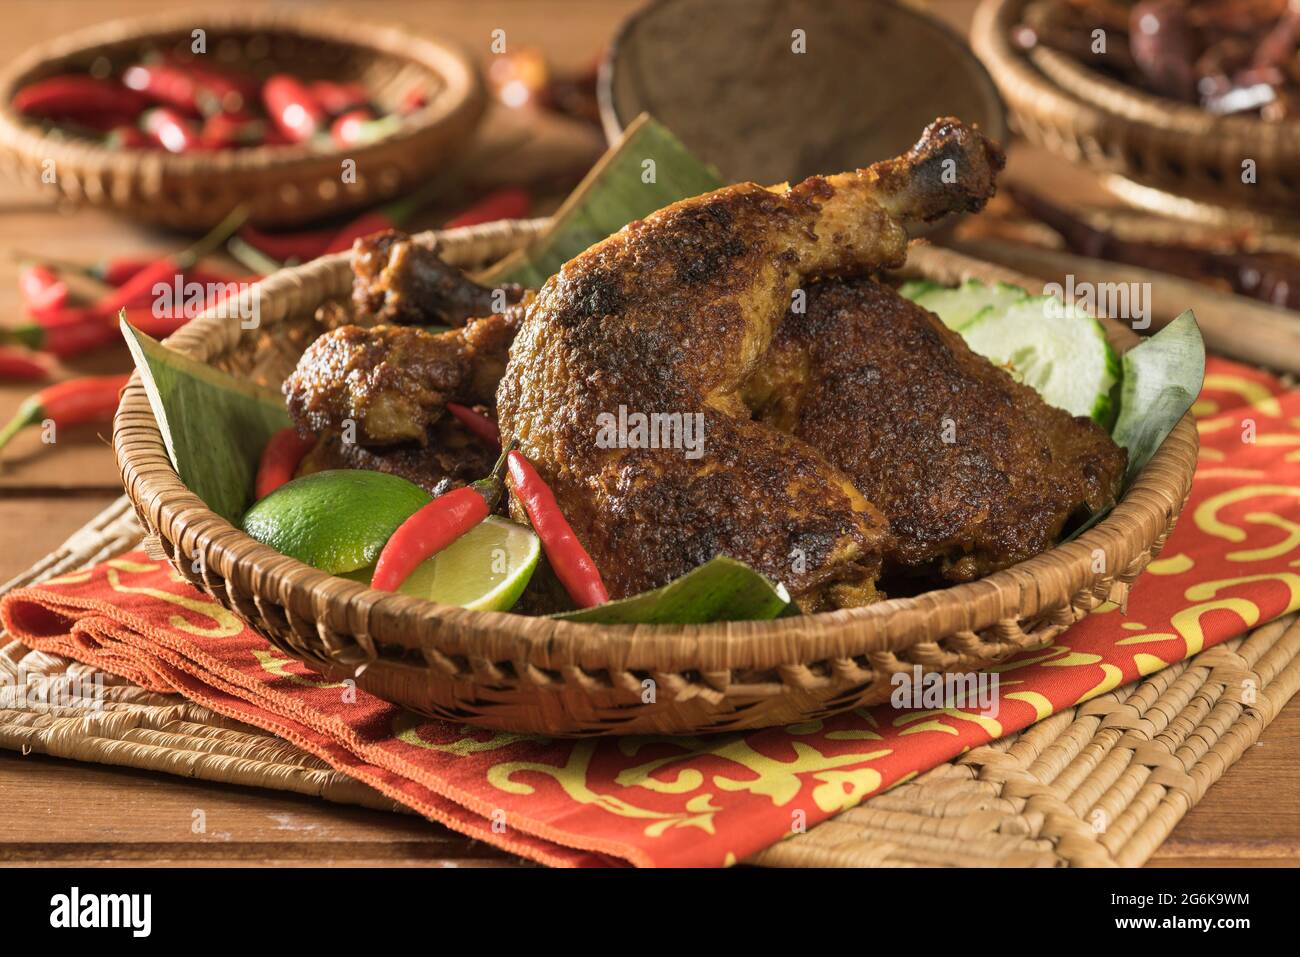 Ayam panggang. Indonesian Malaysian grilled chicken. South East Asia Food Stock Photo